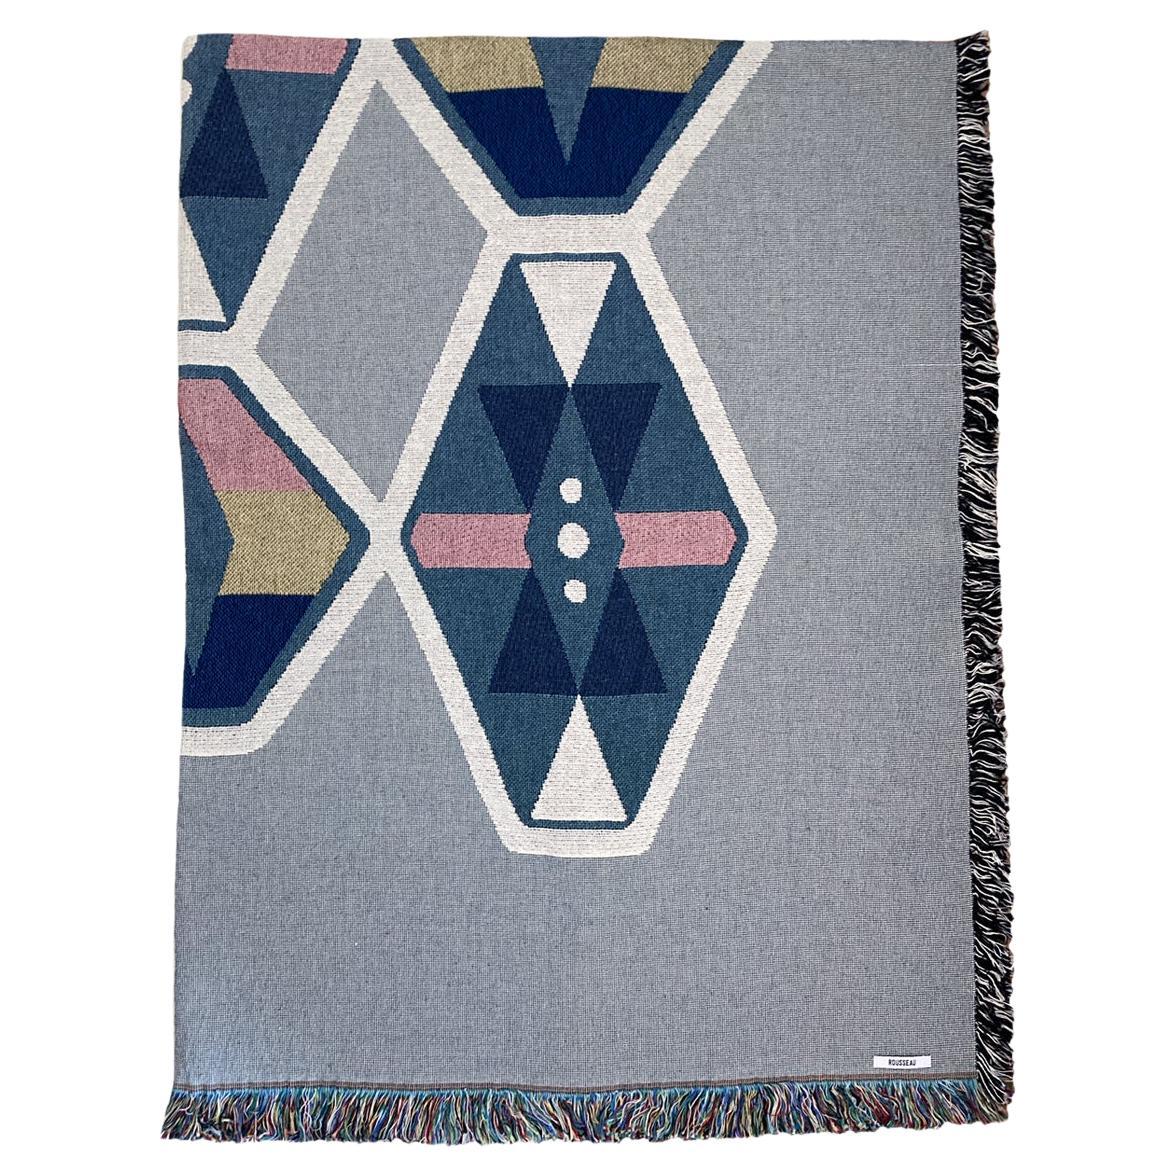 Petite Loom Woven Throw Blanket, Fog Gray Geo, 40 x 54 For Sale